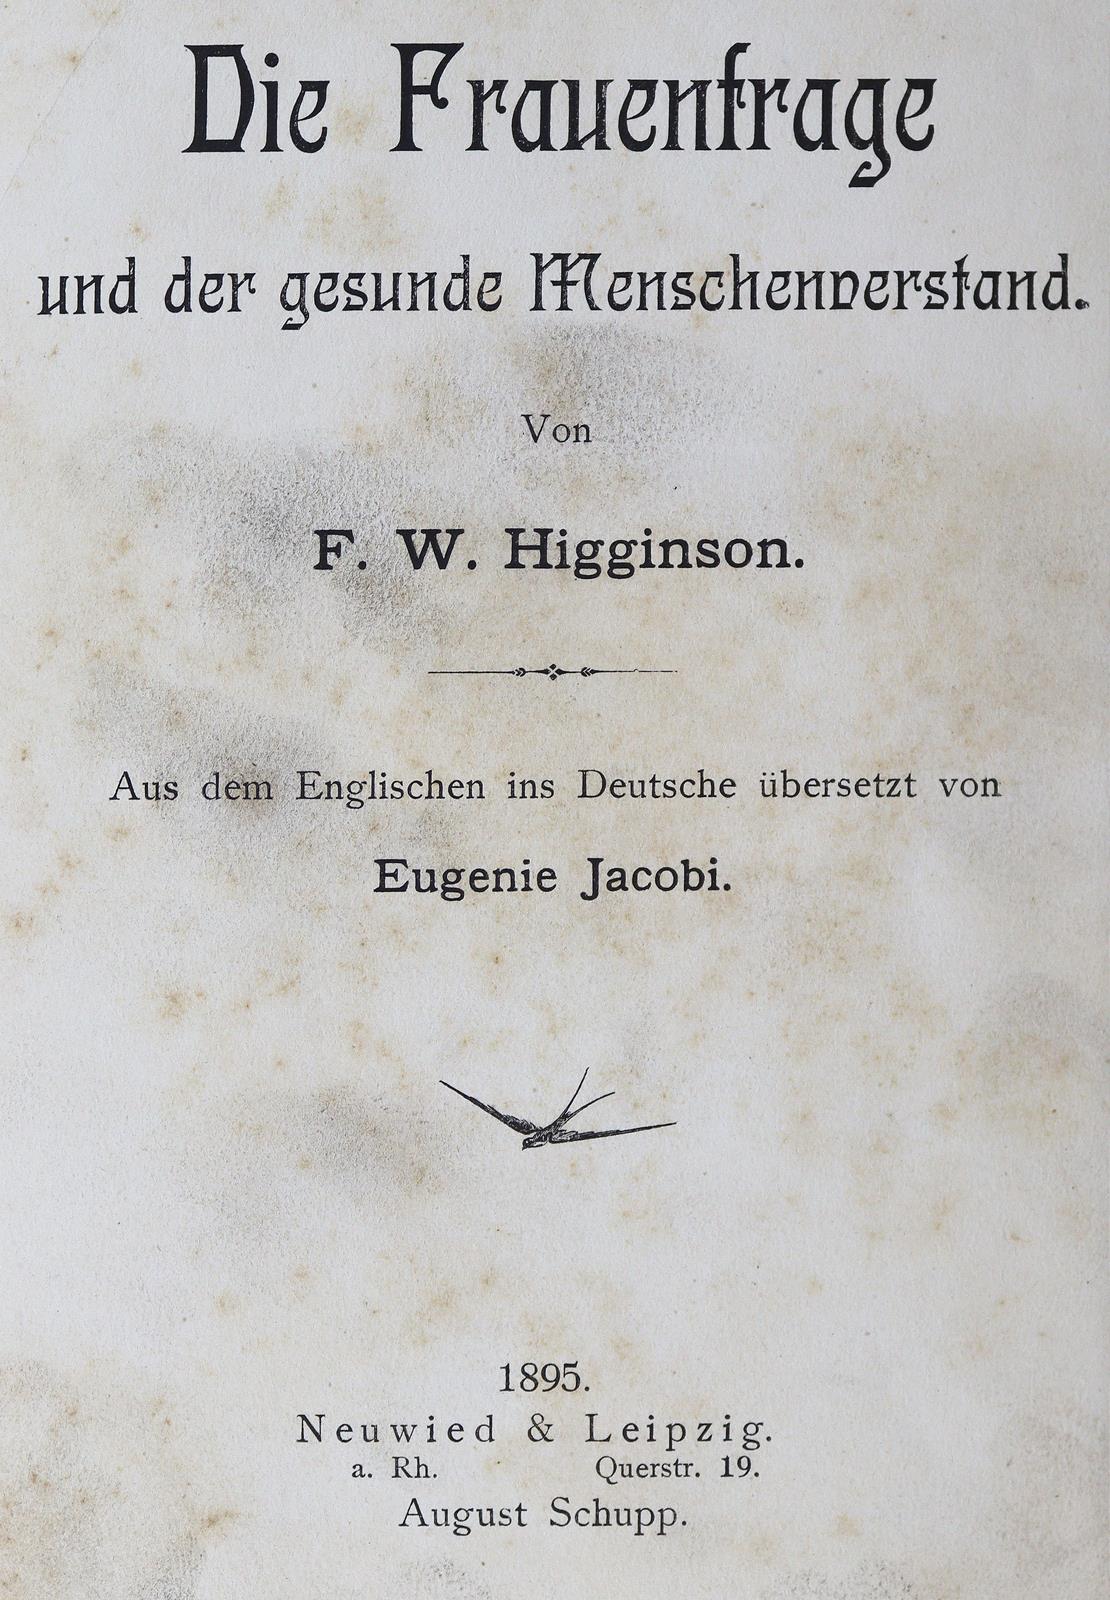 Higginson,F.W. (d.i. T.W.Higginson). | Bild Nr.1